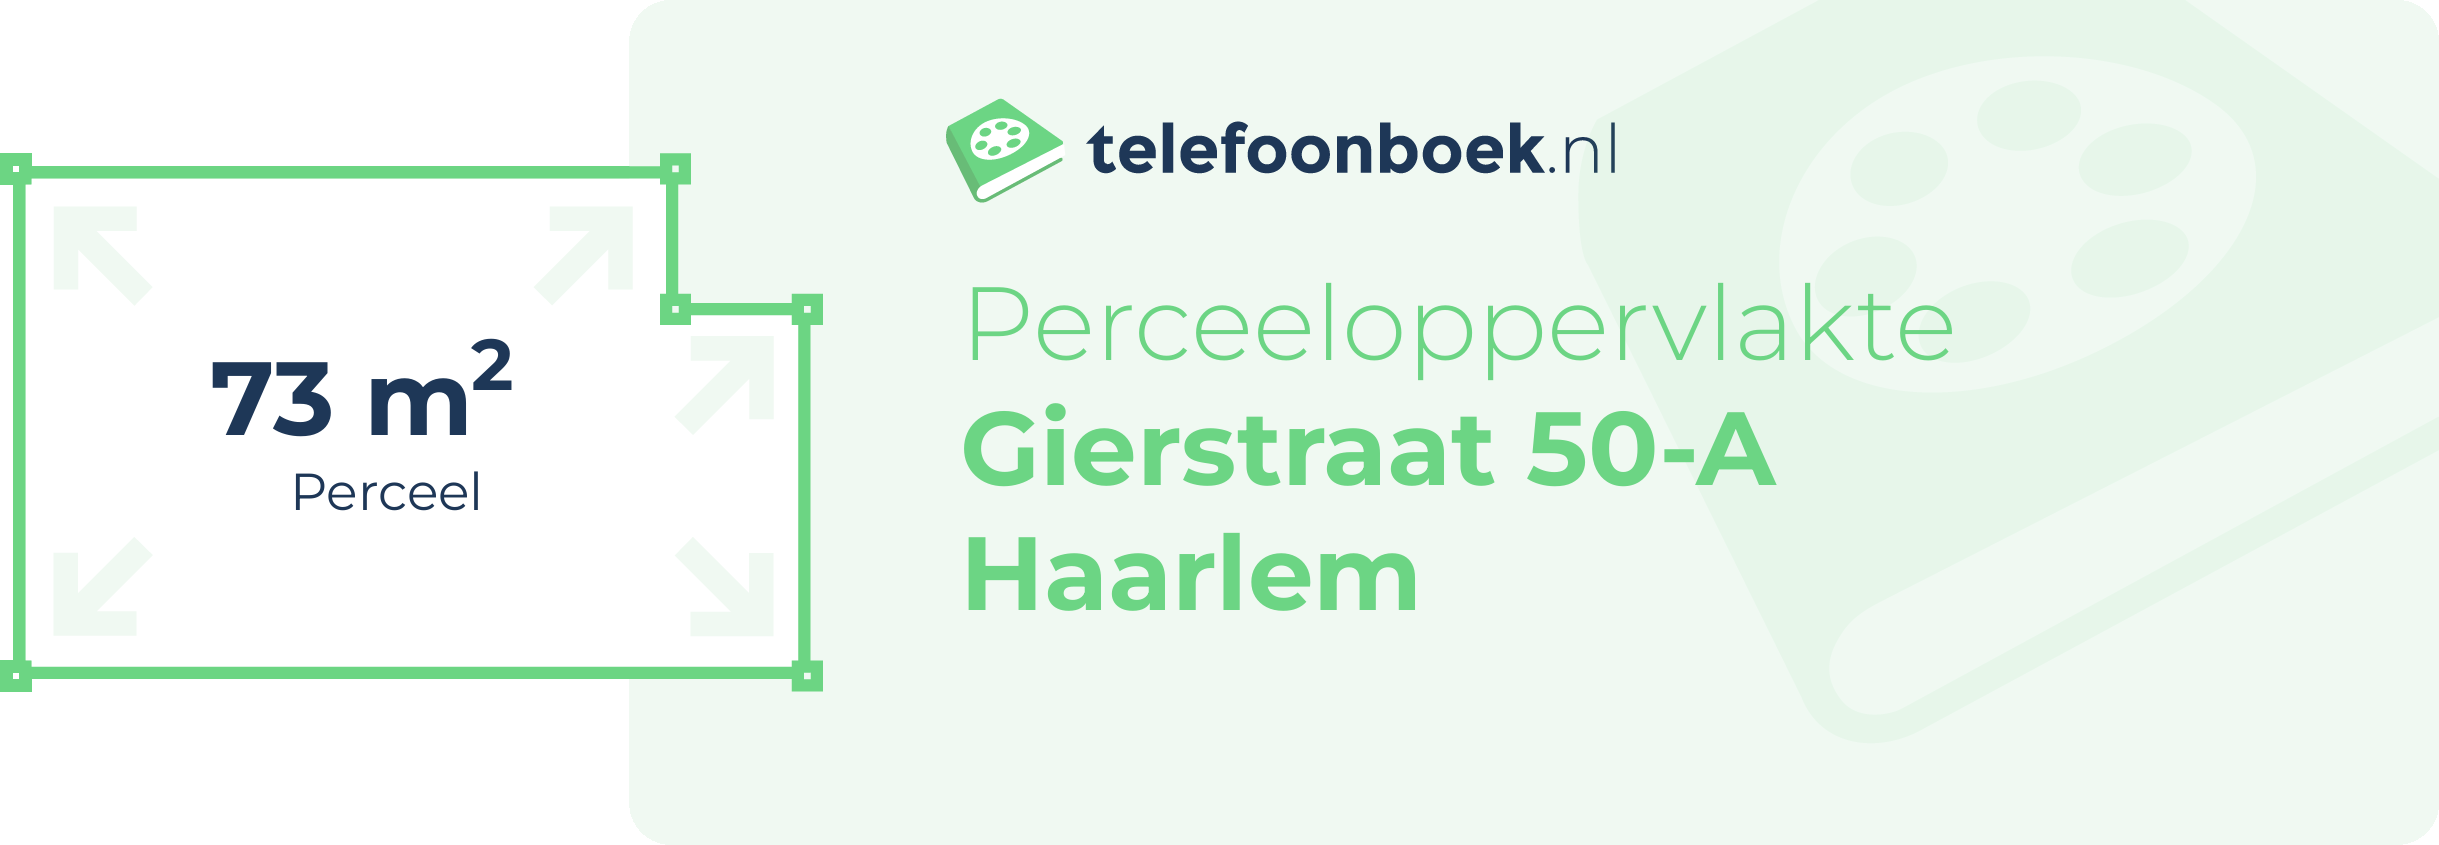 Perceeloppervlakte Gierstraat 50-A Haarlem